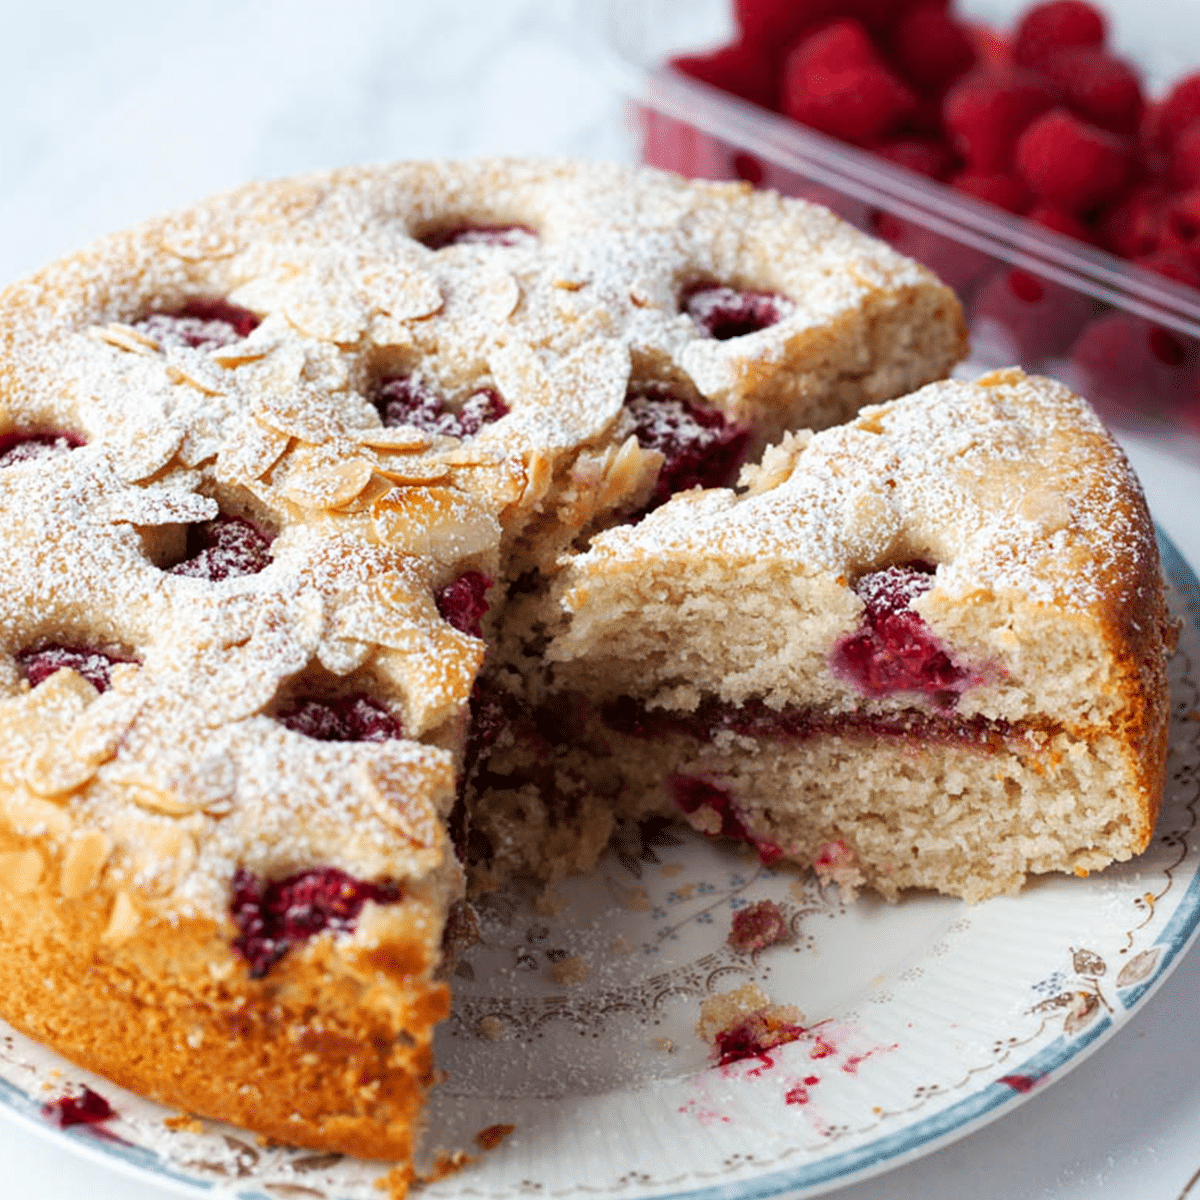 Vegan Raspberry Bakewell Cake - A British cake made with raspberries and almonds